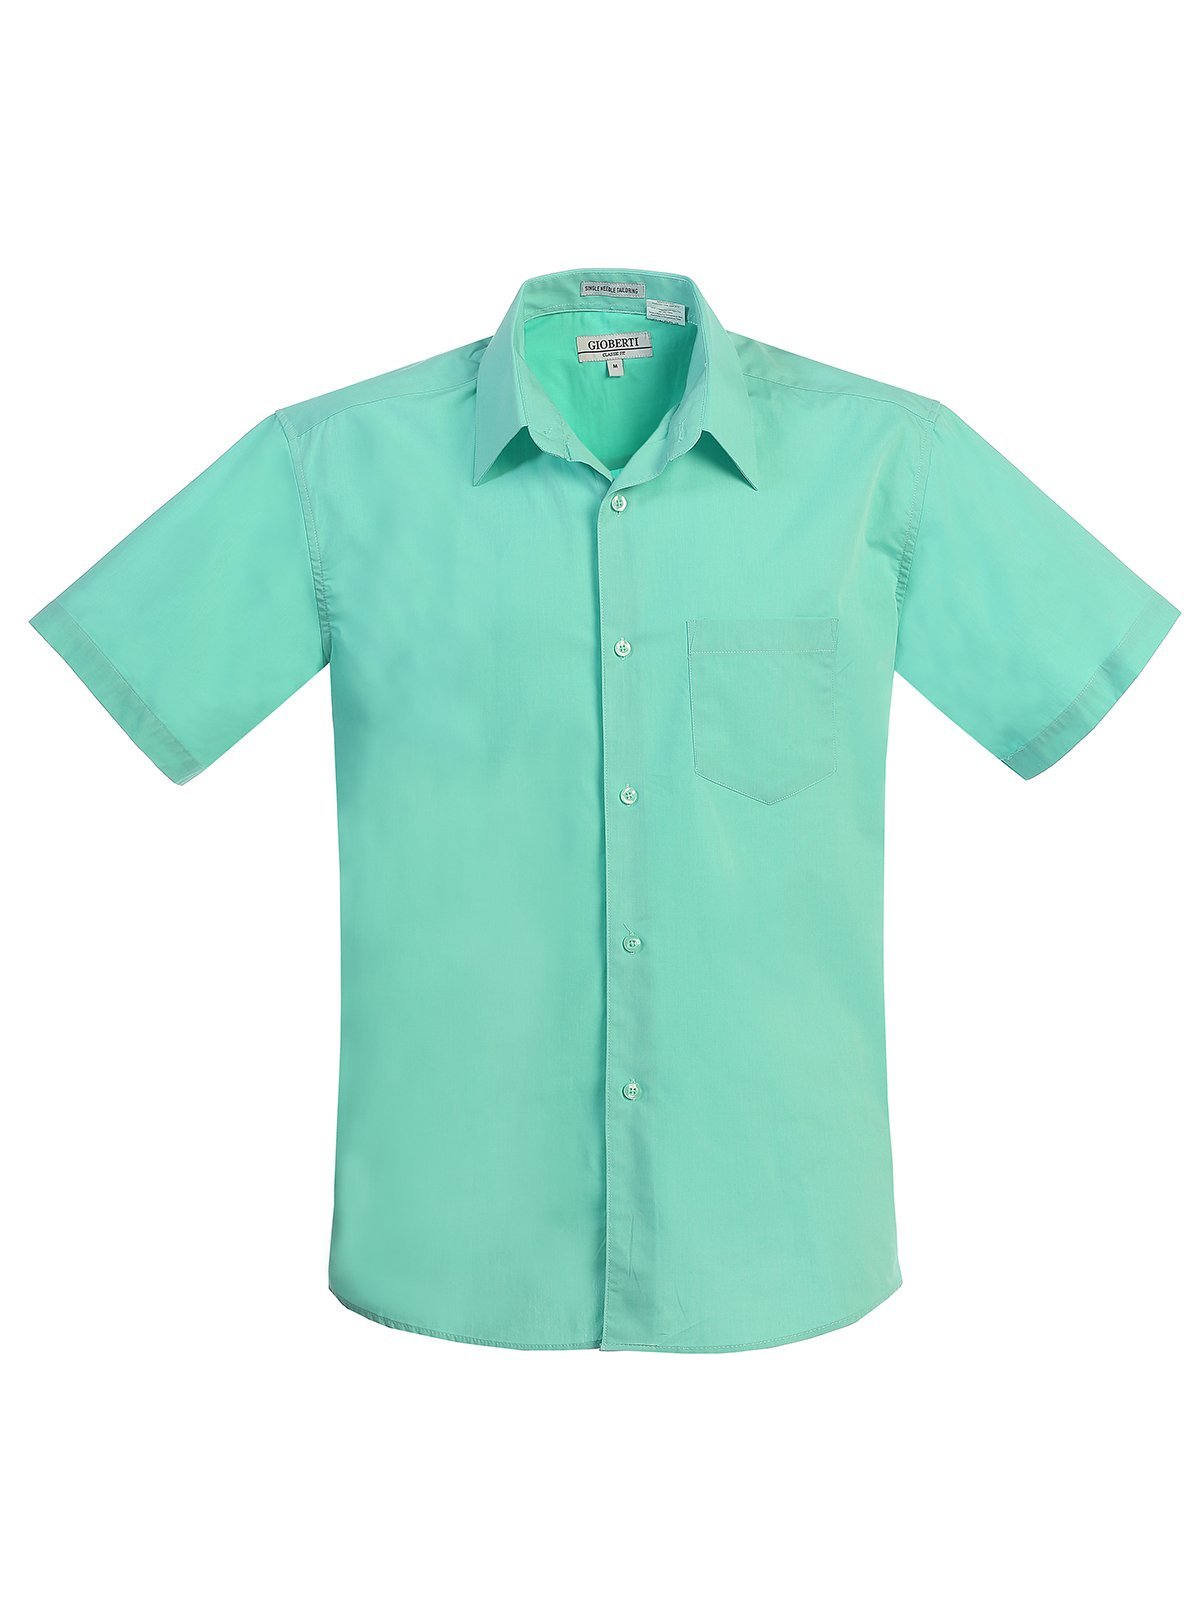 Boys Short Sleeve Dress Shirt SIZE 4-7  GB-DSS